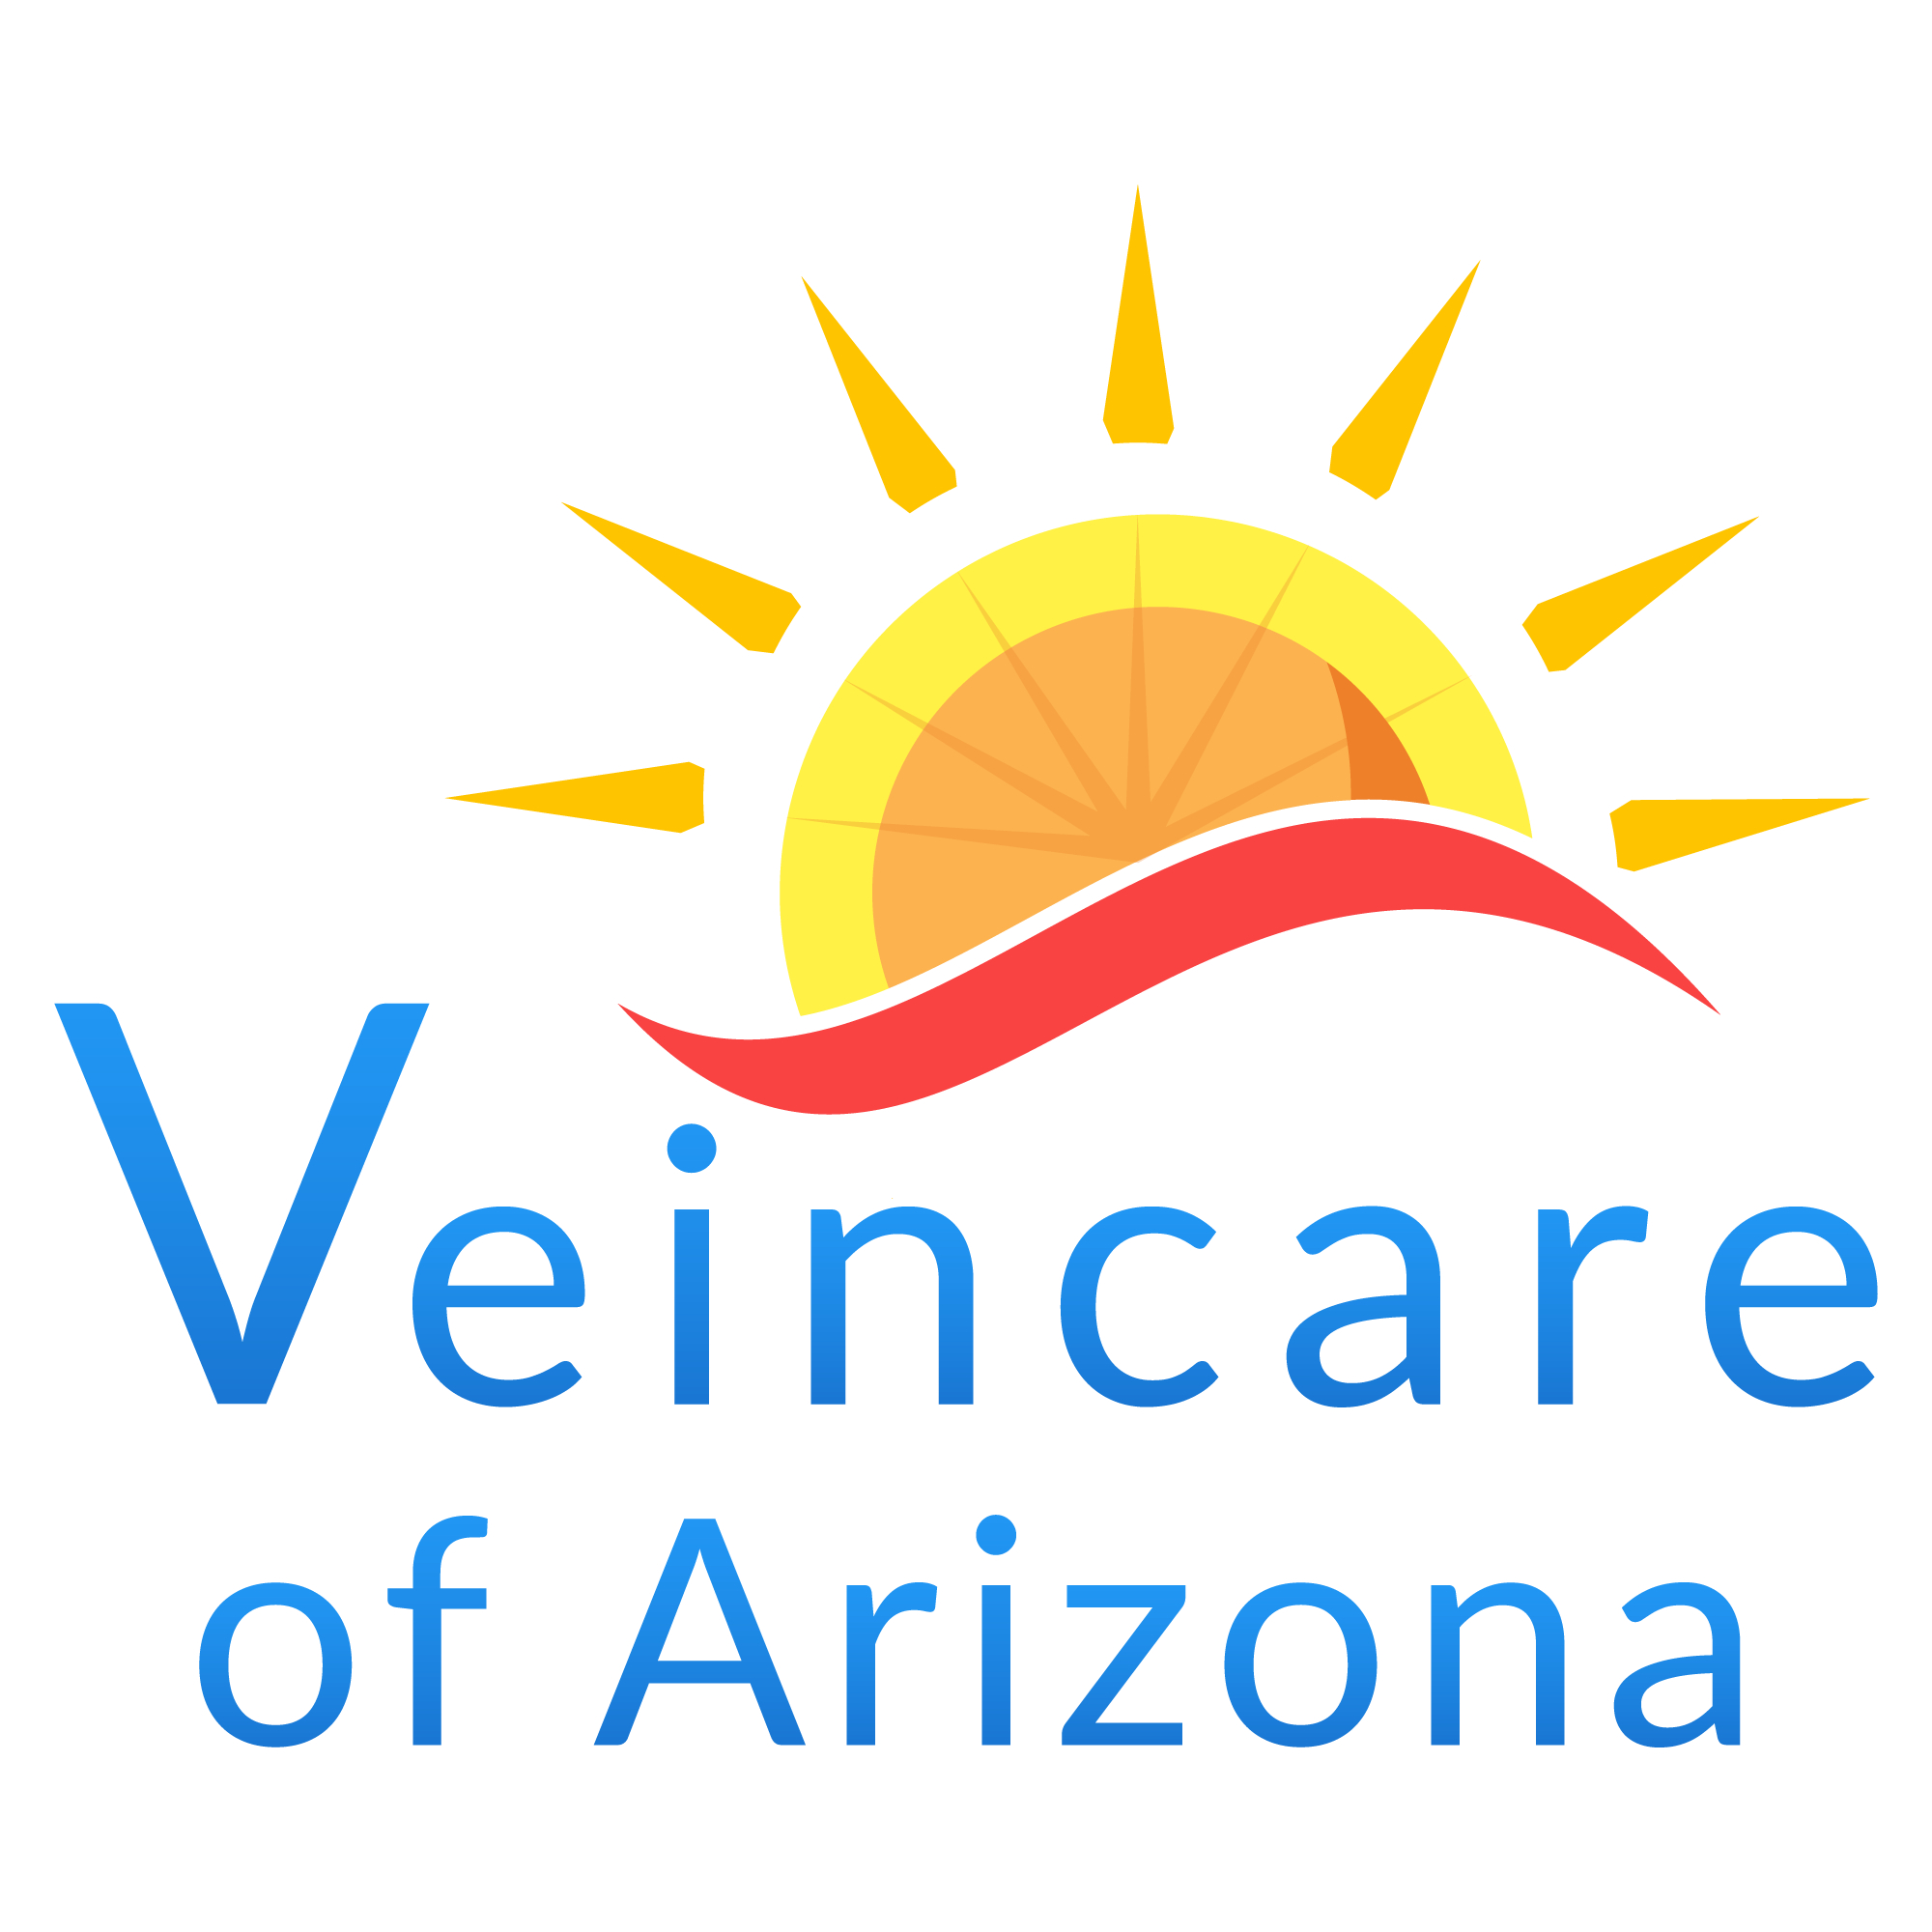 Veincare of Arizona Logo